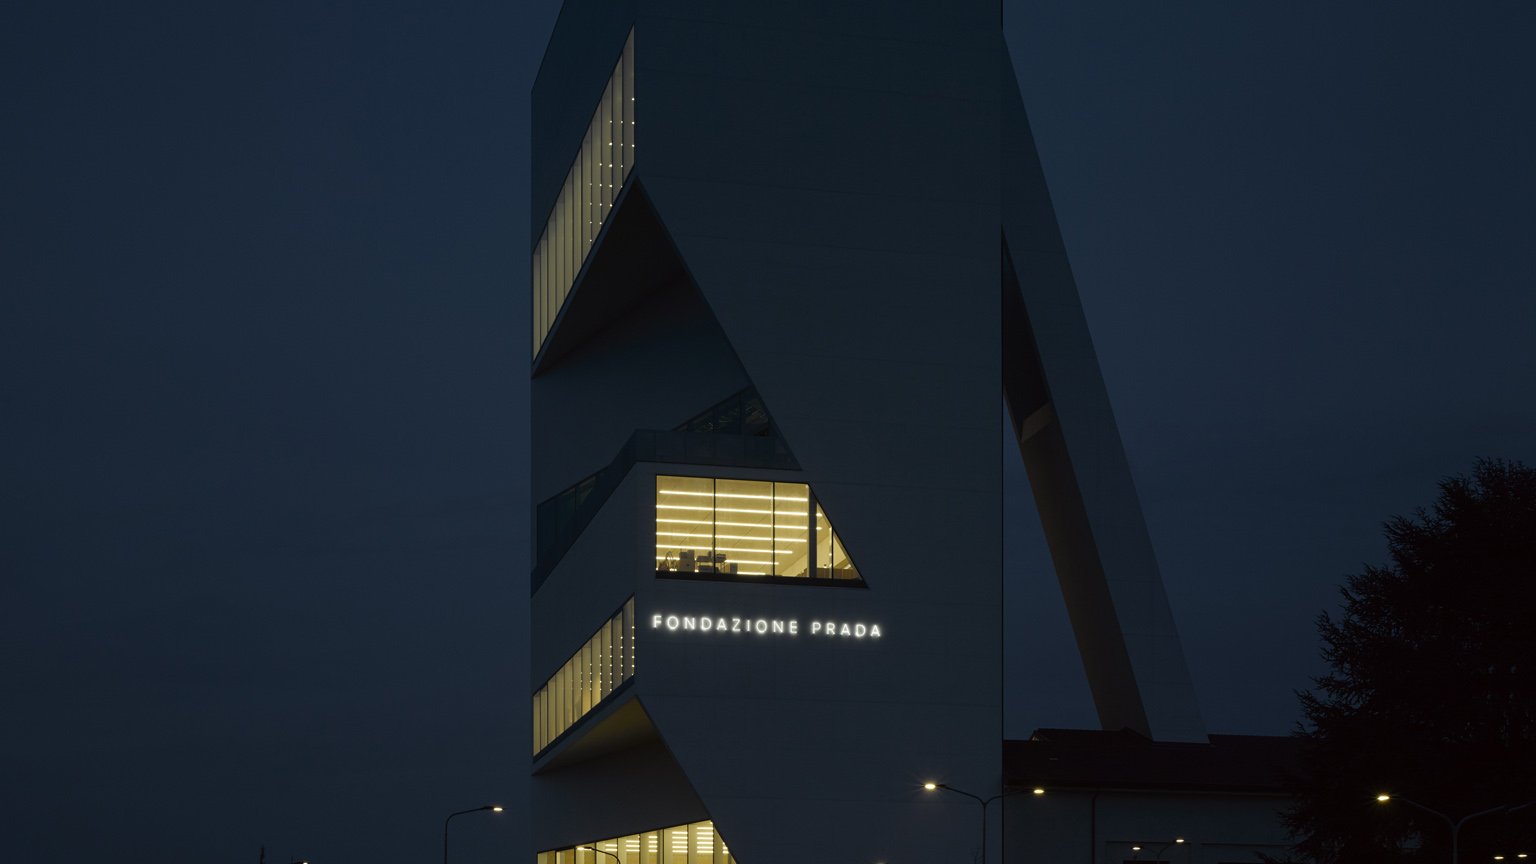 Torre Fondazione Prada, Milan Architectural project by OMA